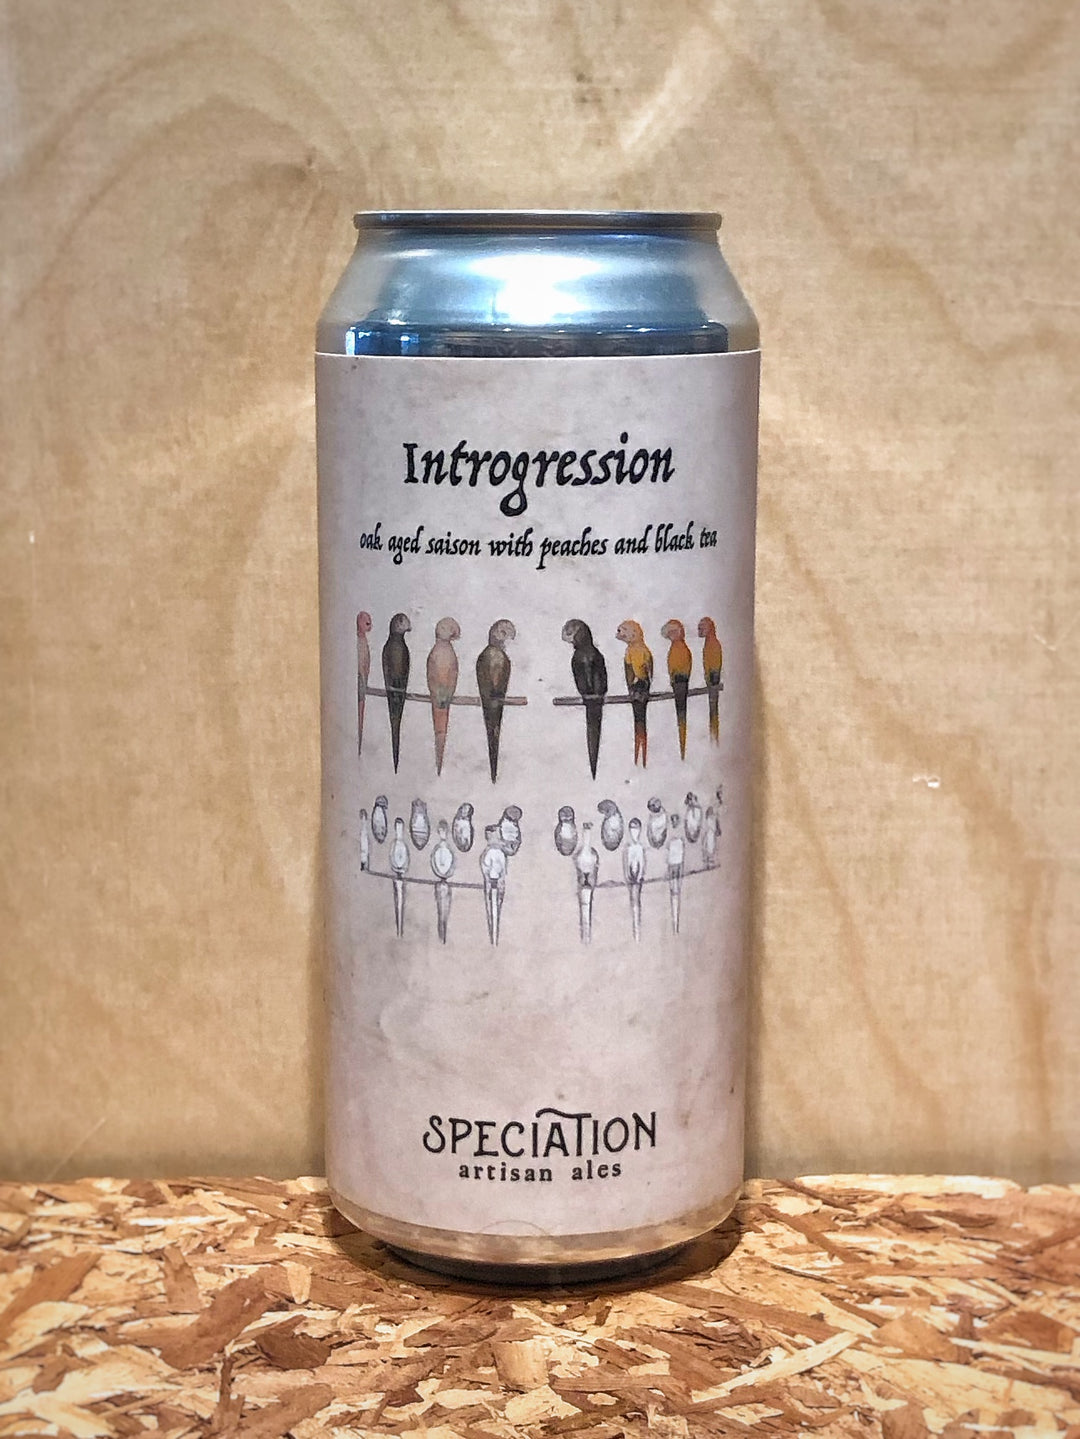 Speciation Artisan Ales 'Introgression' Oak Aged Saison with Peaches and Black Tea (Grand Rapids, MI)